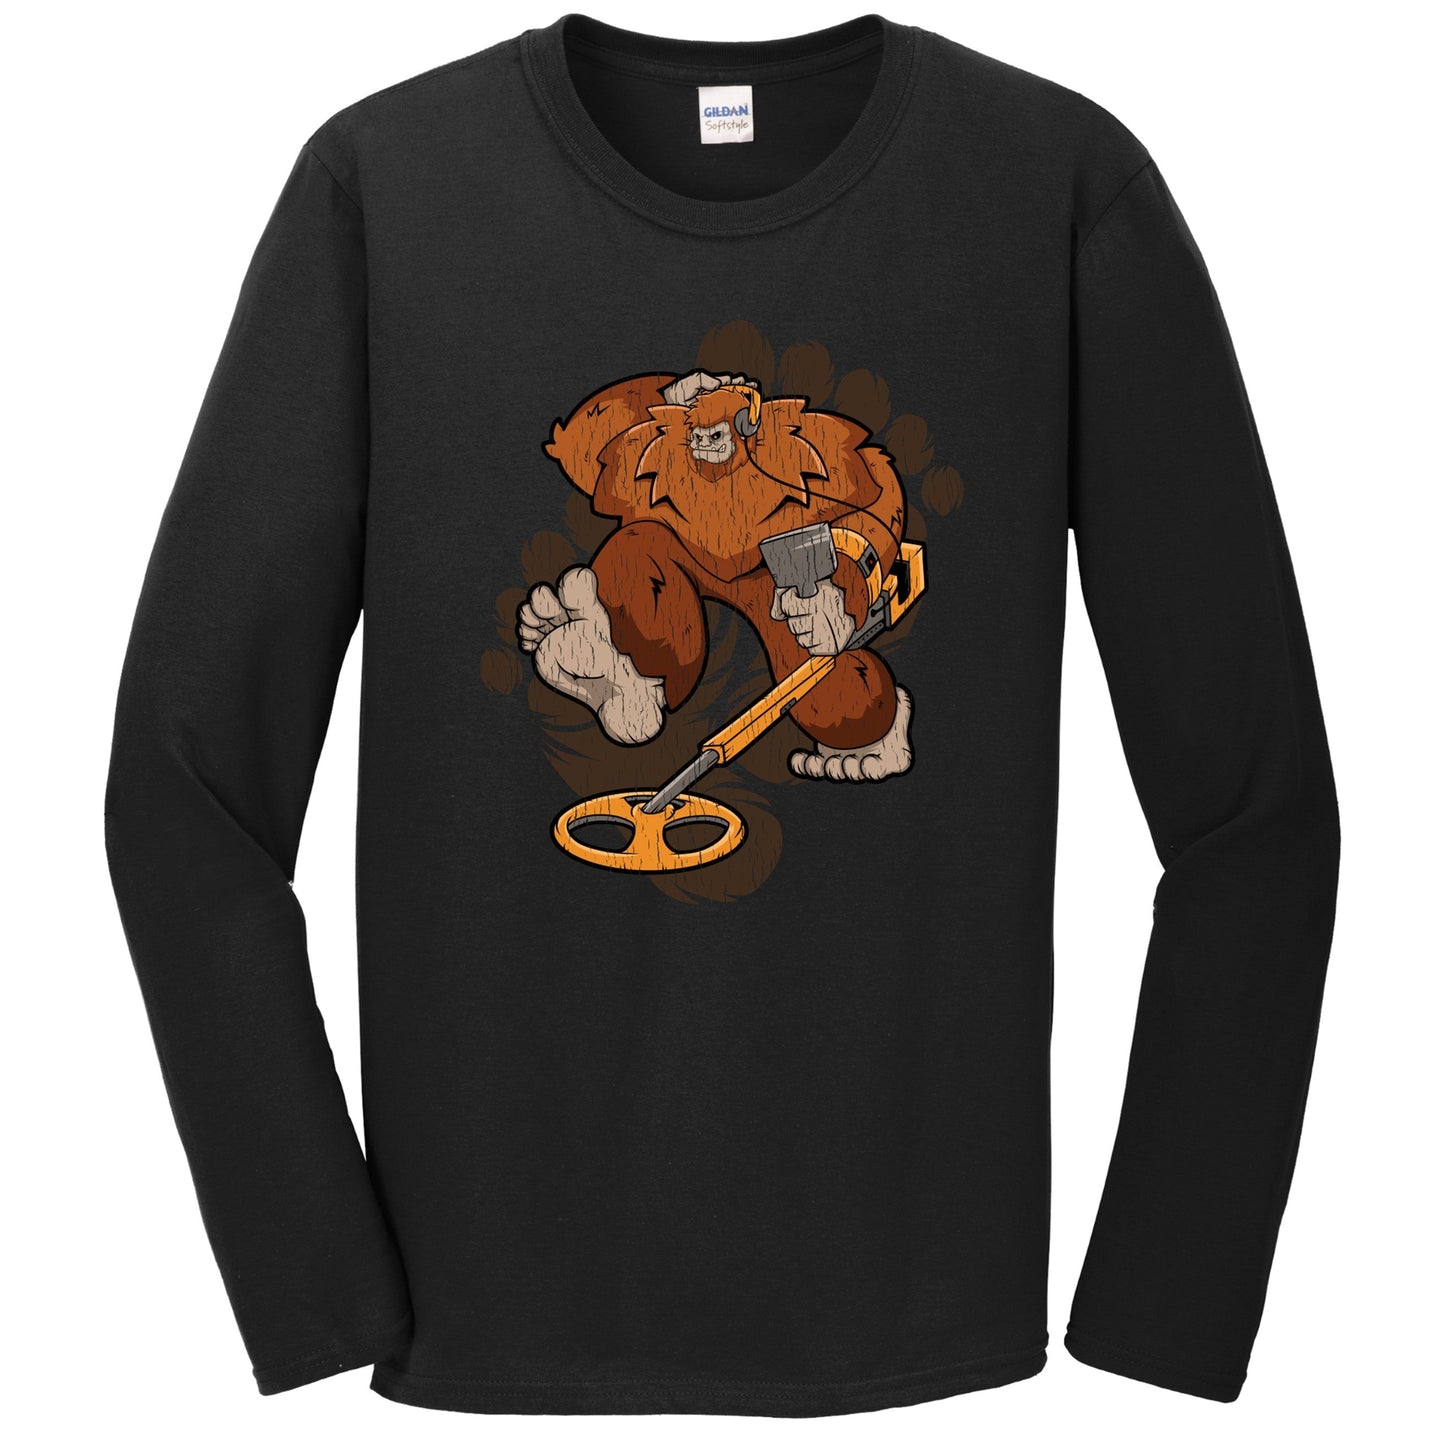 Bigfoot Metal Detector Shirt - Sasquatch Metal Detecting Long Sleeve T-Shirt